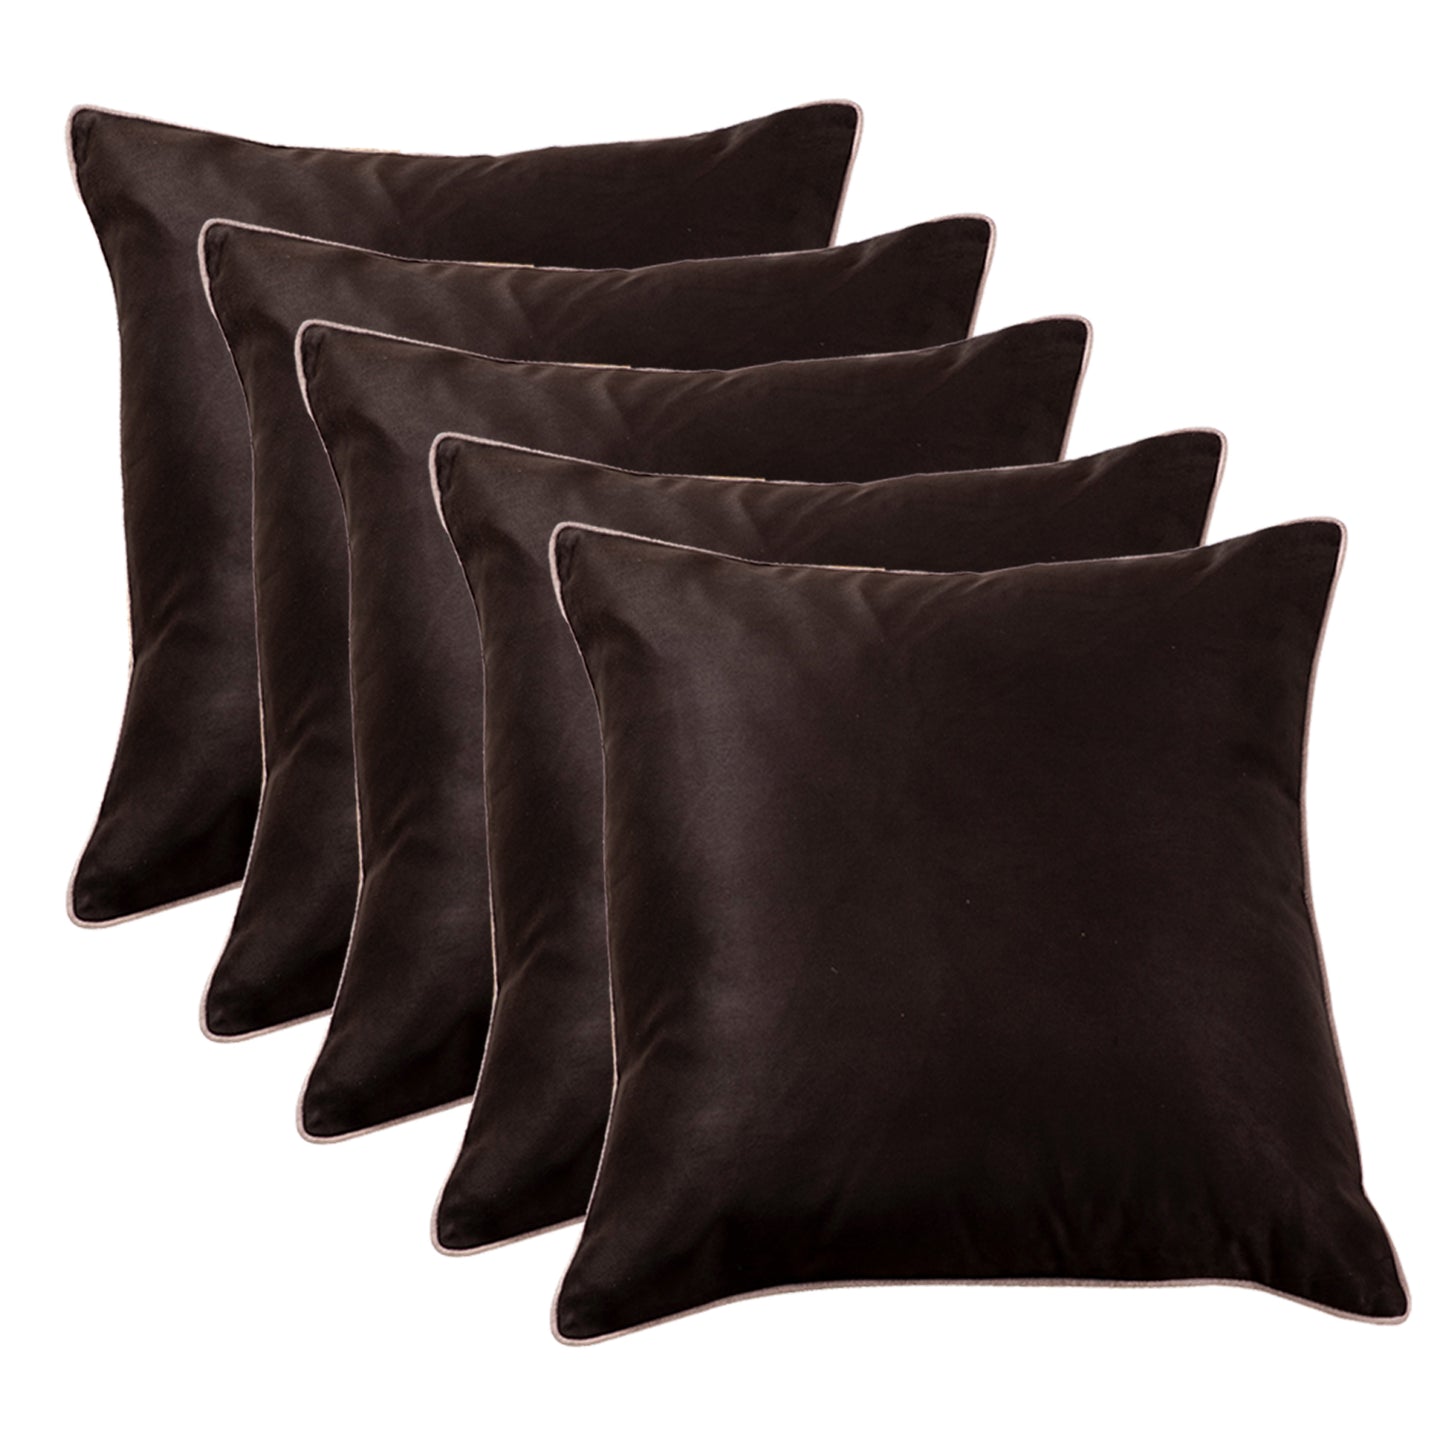 Lush Velvet Cushion Cover Dark Brown 16 X 16 Inches Set of 5